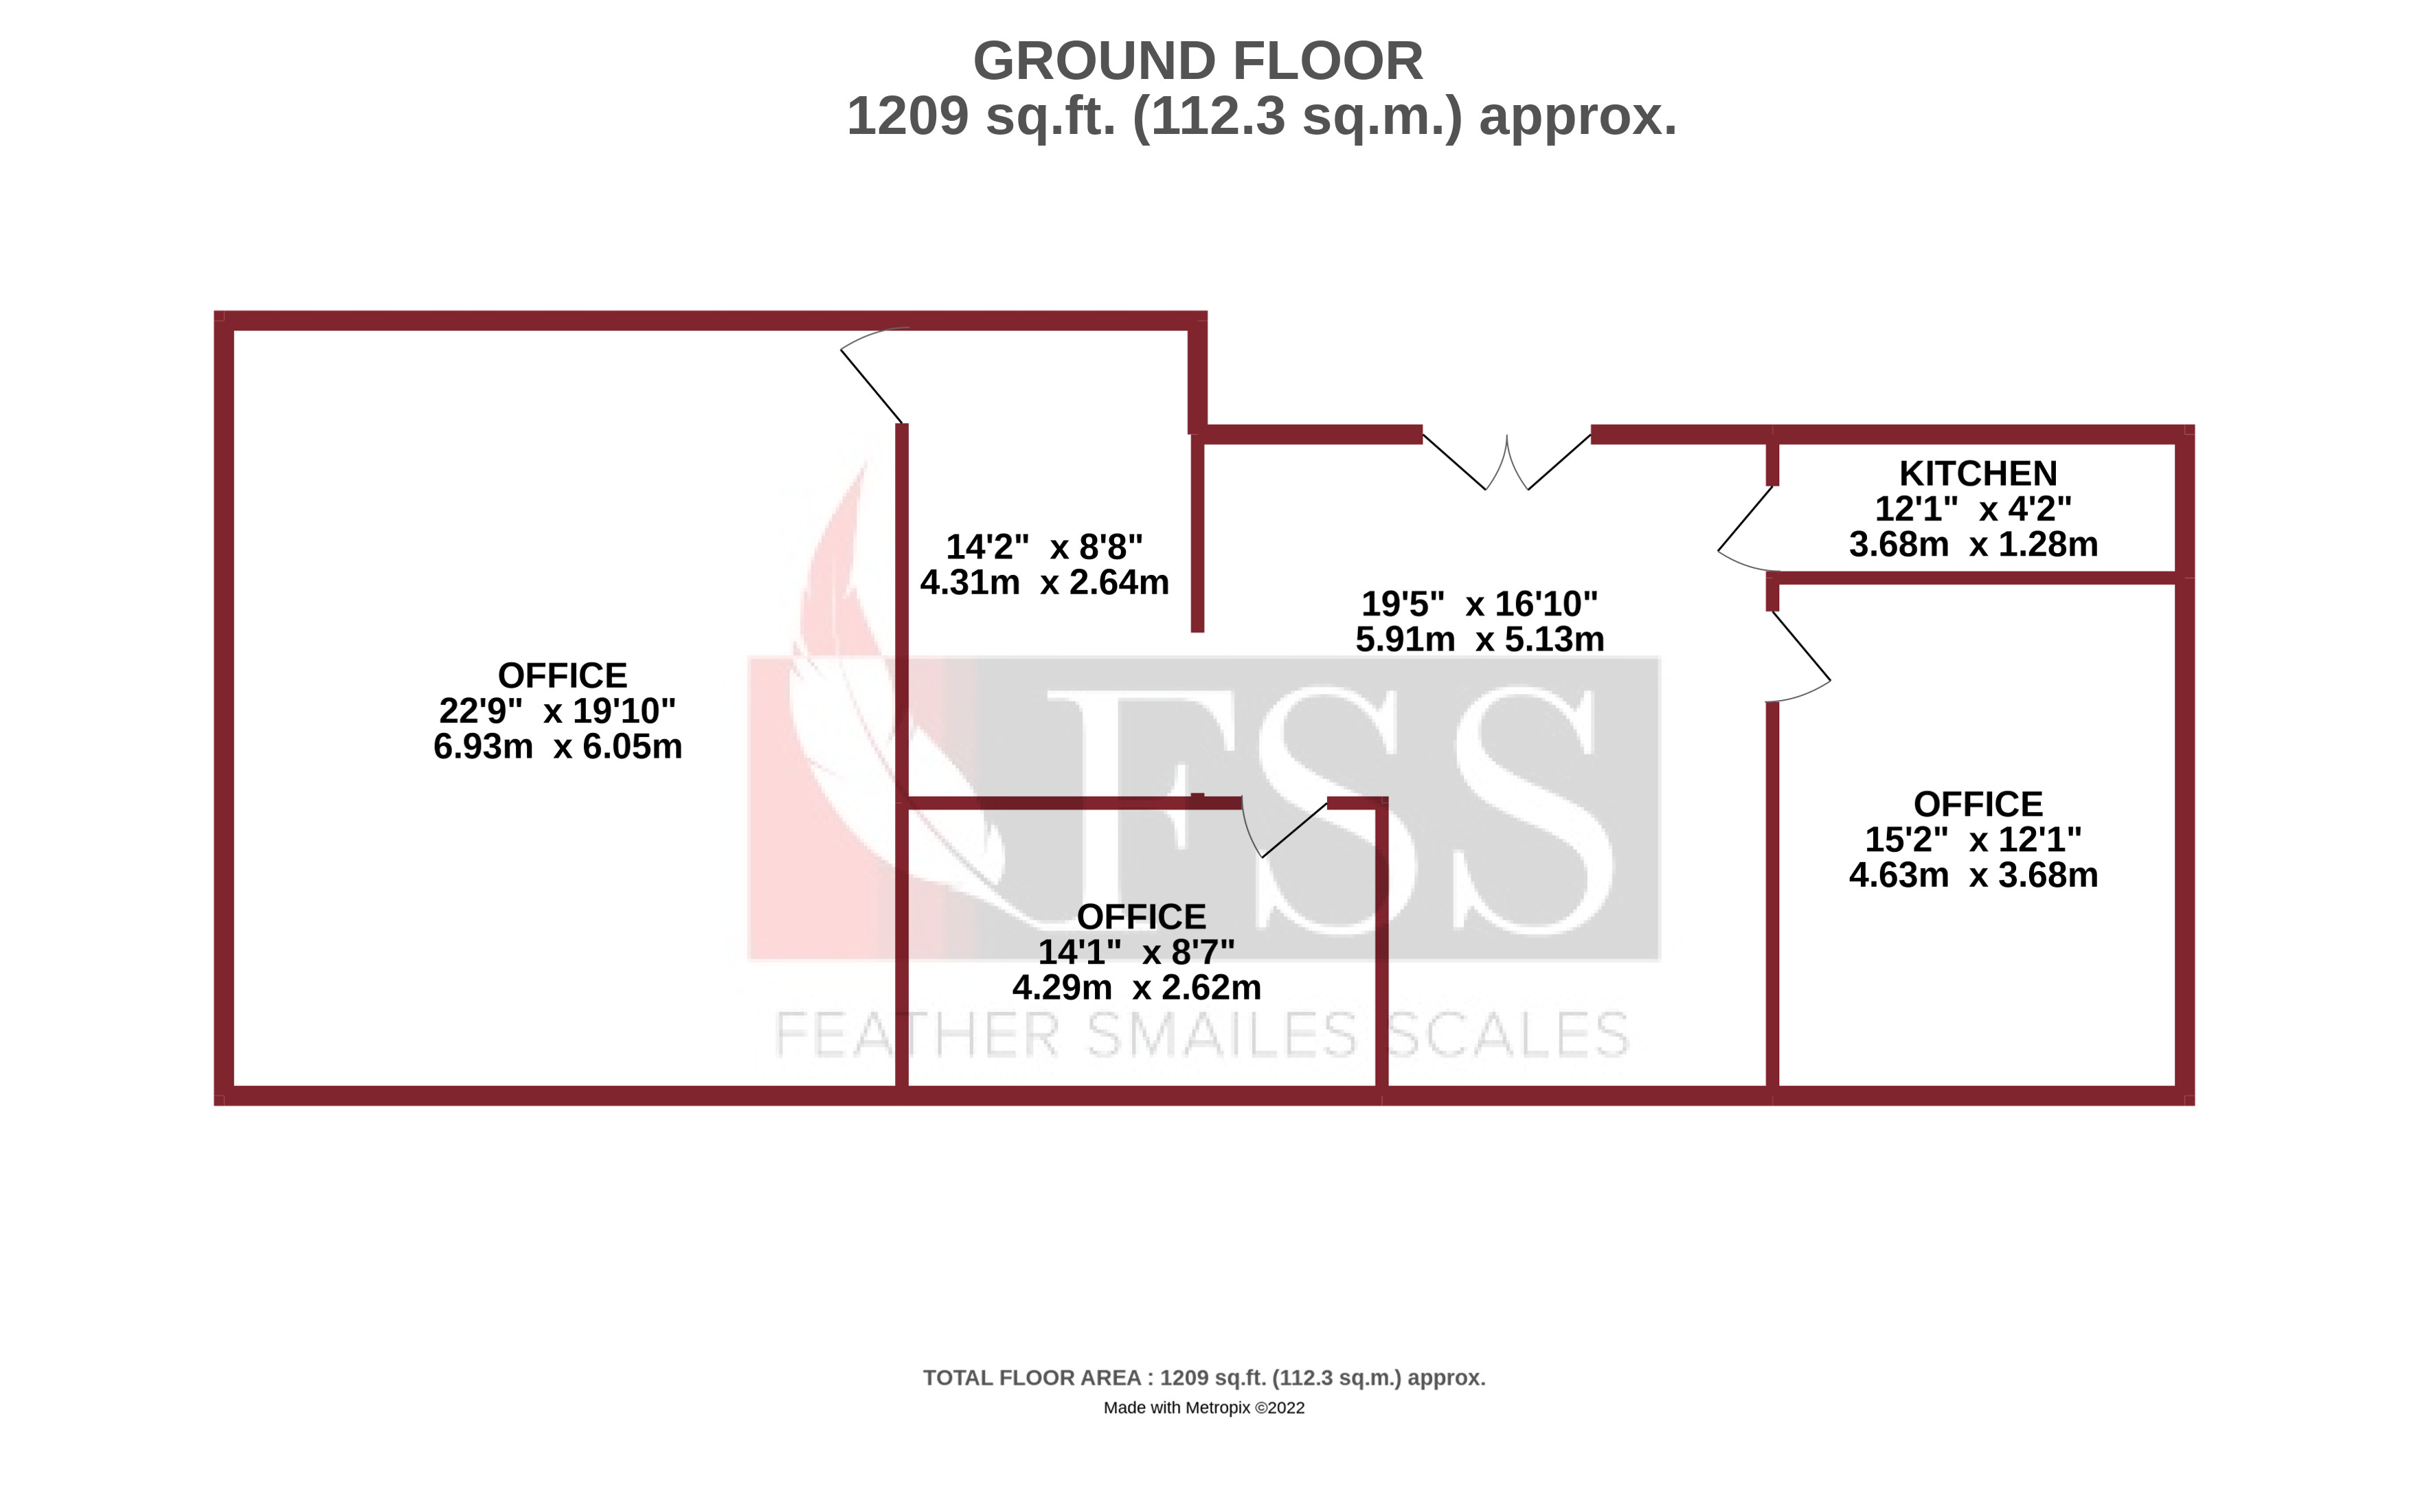 Floorplan for                                                          
                                                    